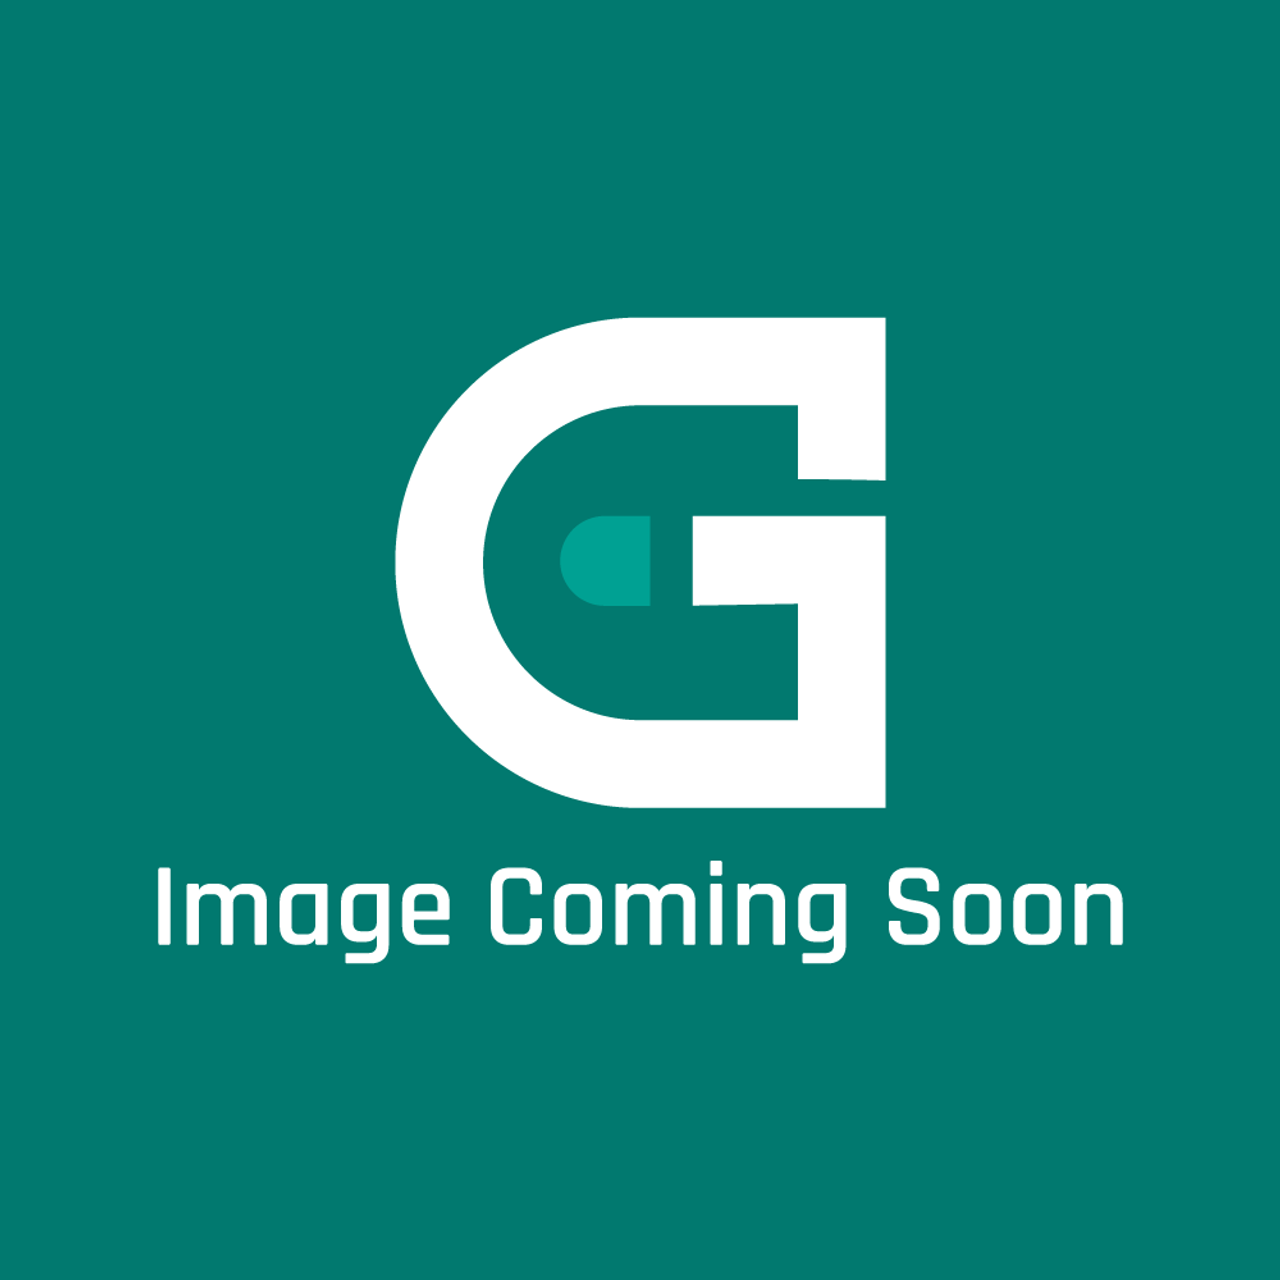 Pitco A7018102C - Fltr, Contl Box Cov P/Rp - Image Coming Soon!